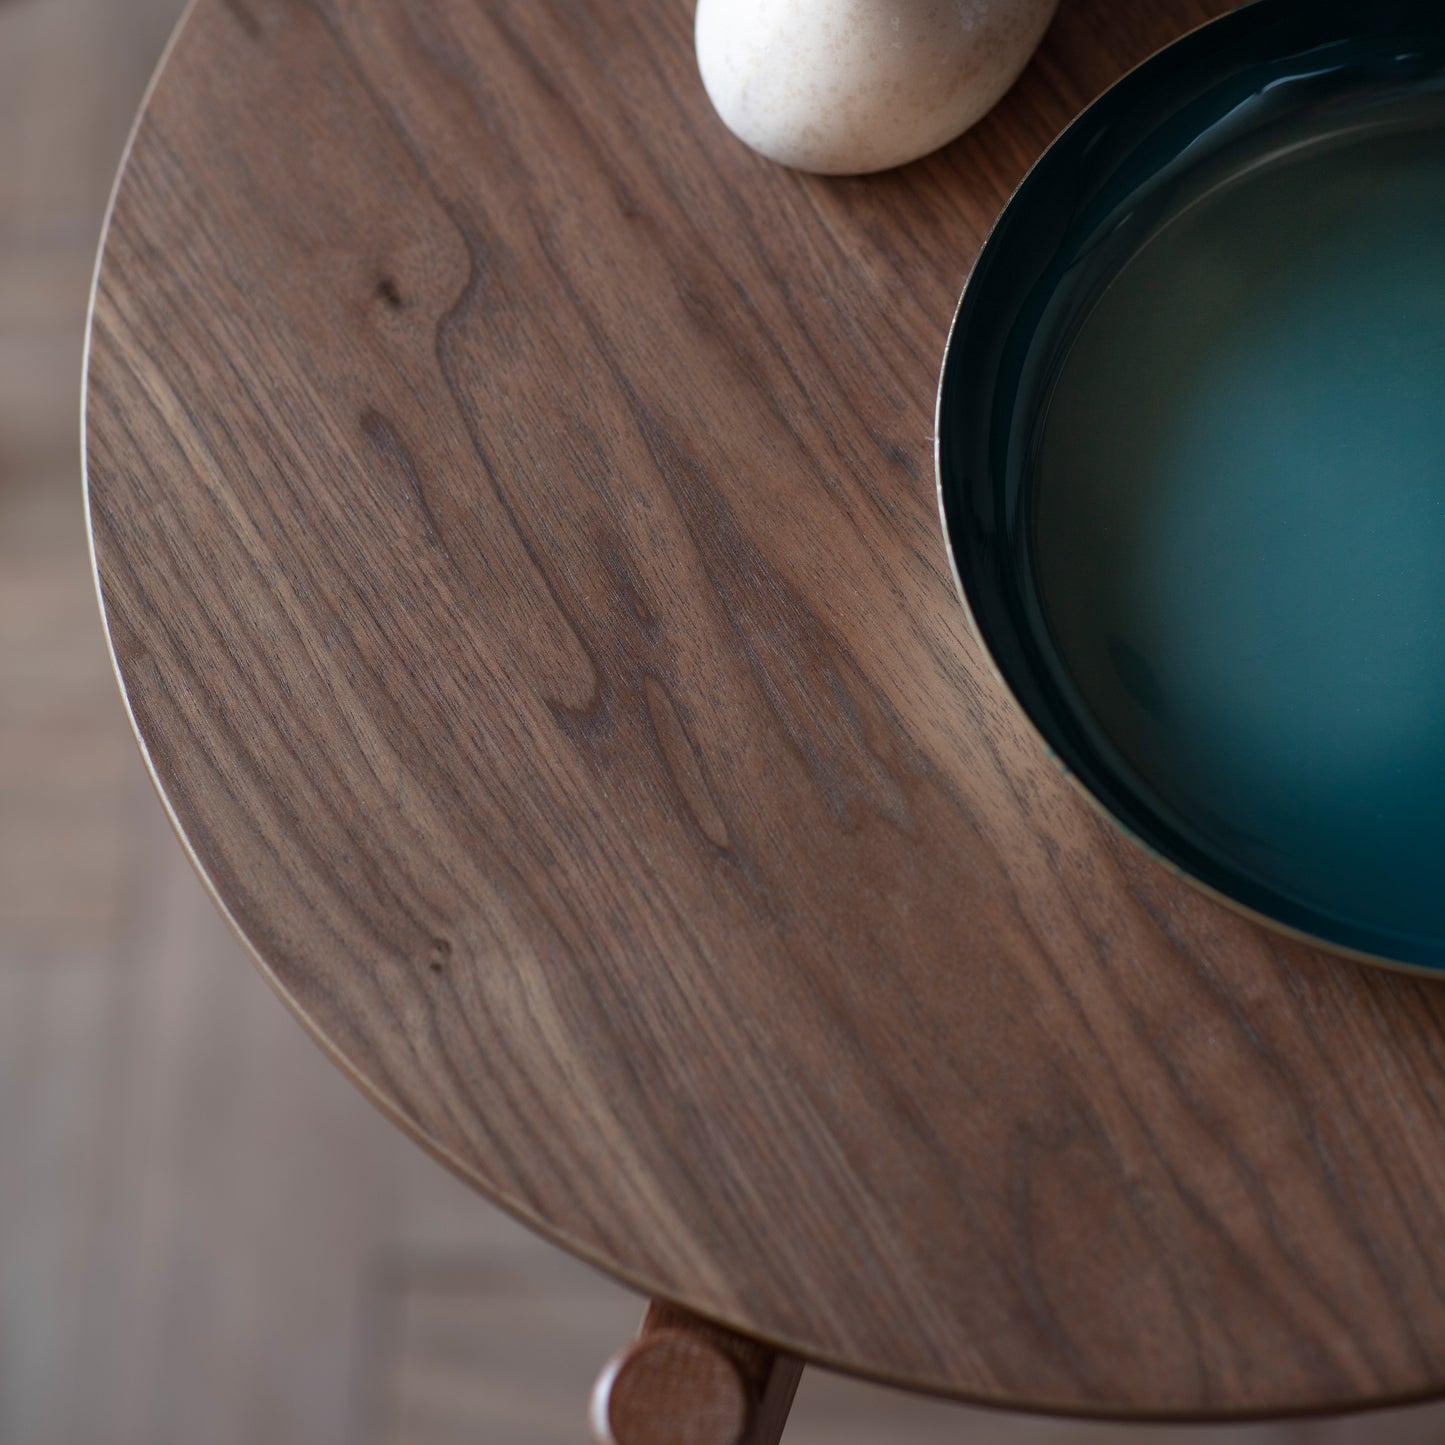 A walnut side table from Kikiathome.co.uk enhances interior decor.